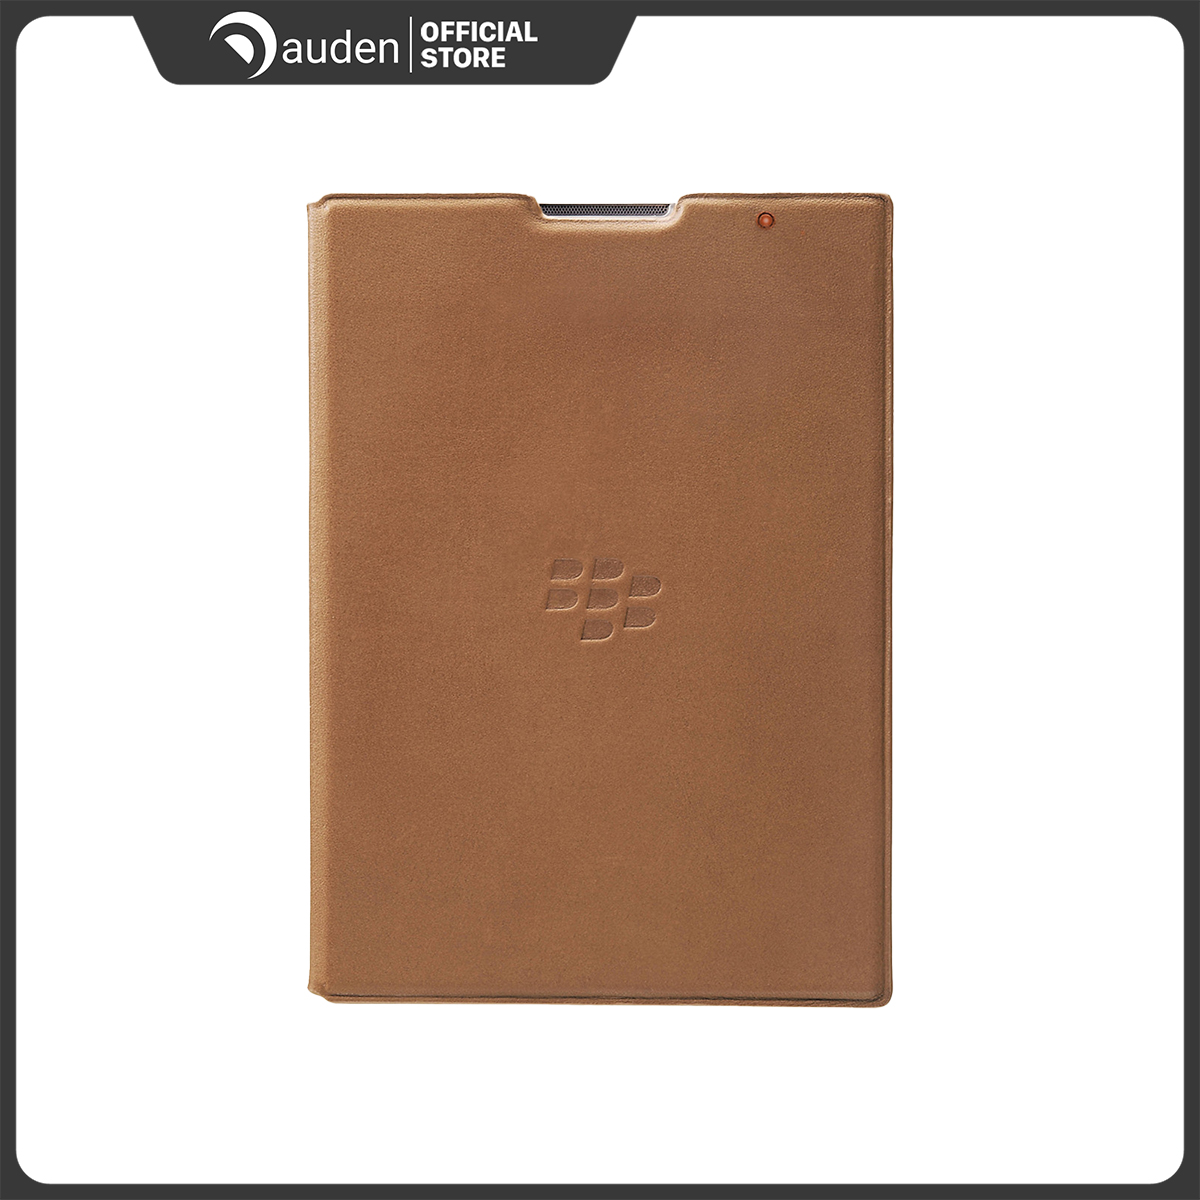 Bao Cầm Tay Gập Leather Flip Case Blackbery Passport - Nâu Fullbox - Dâu